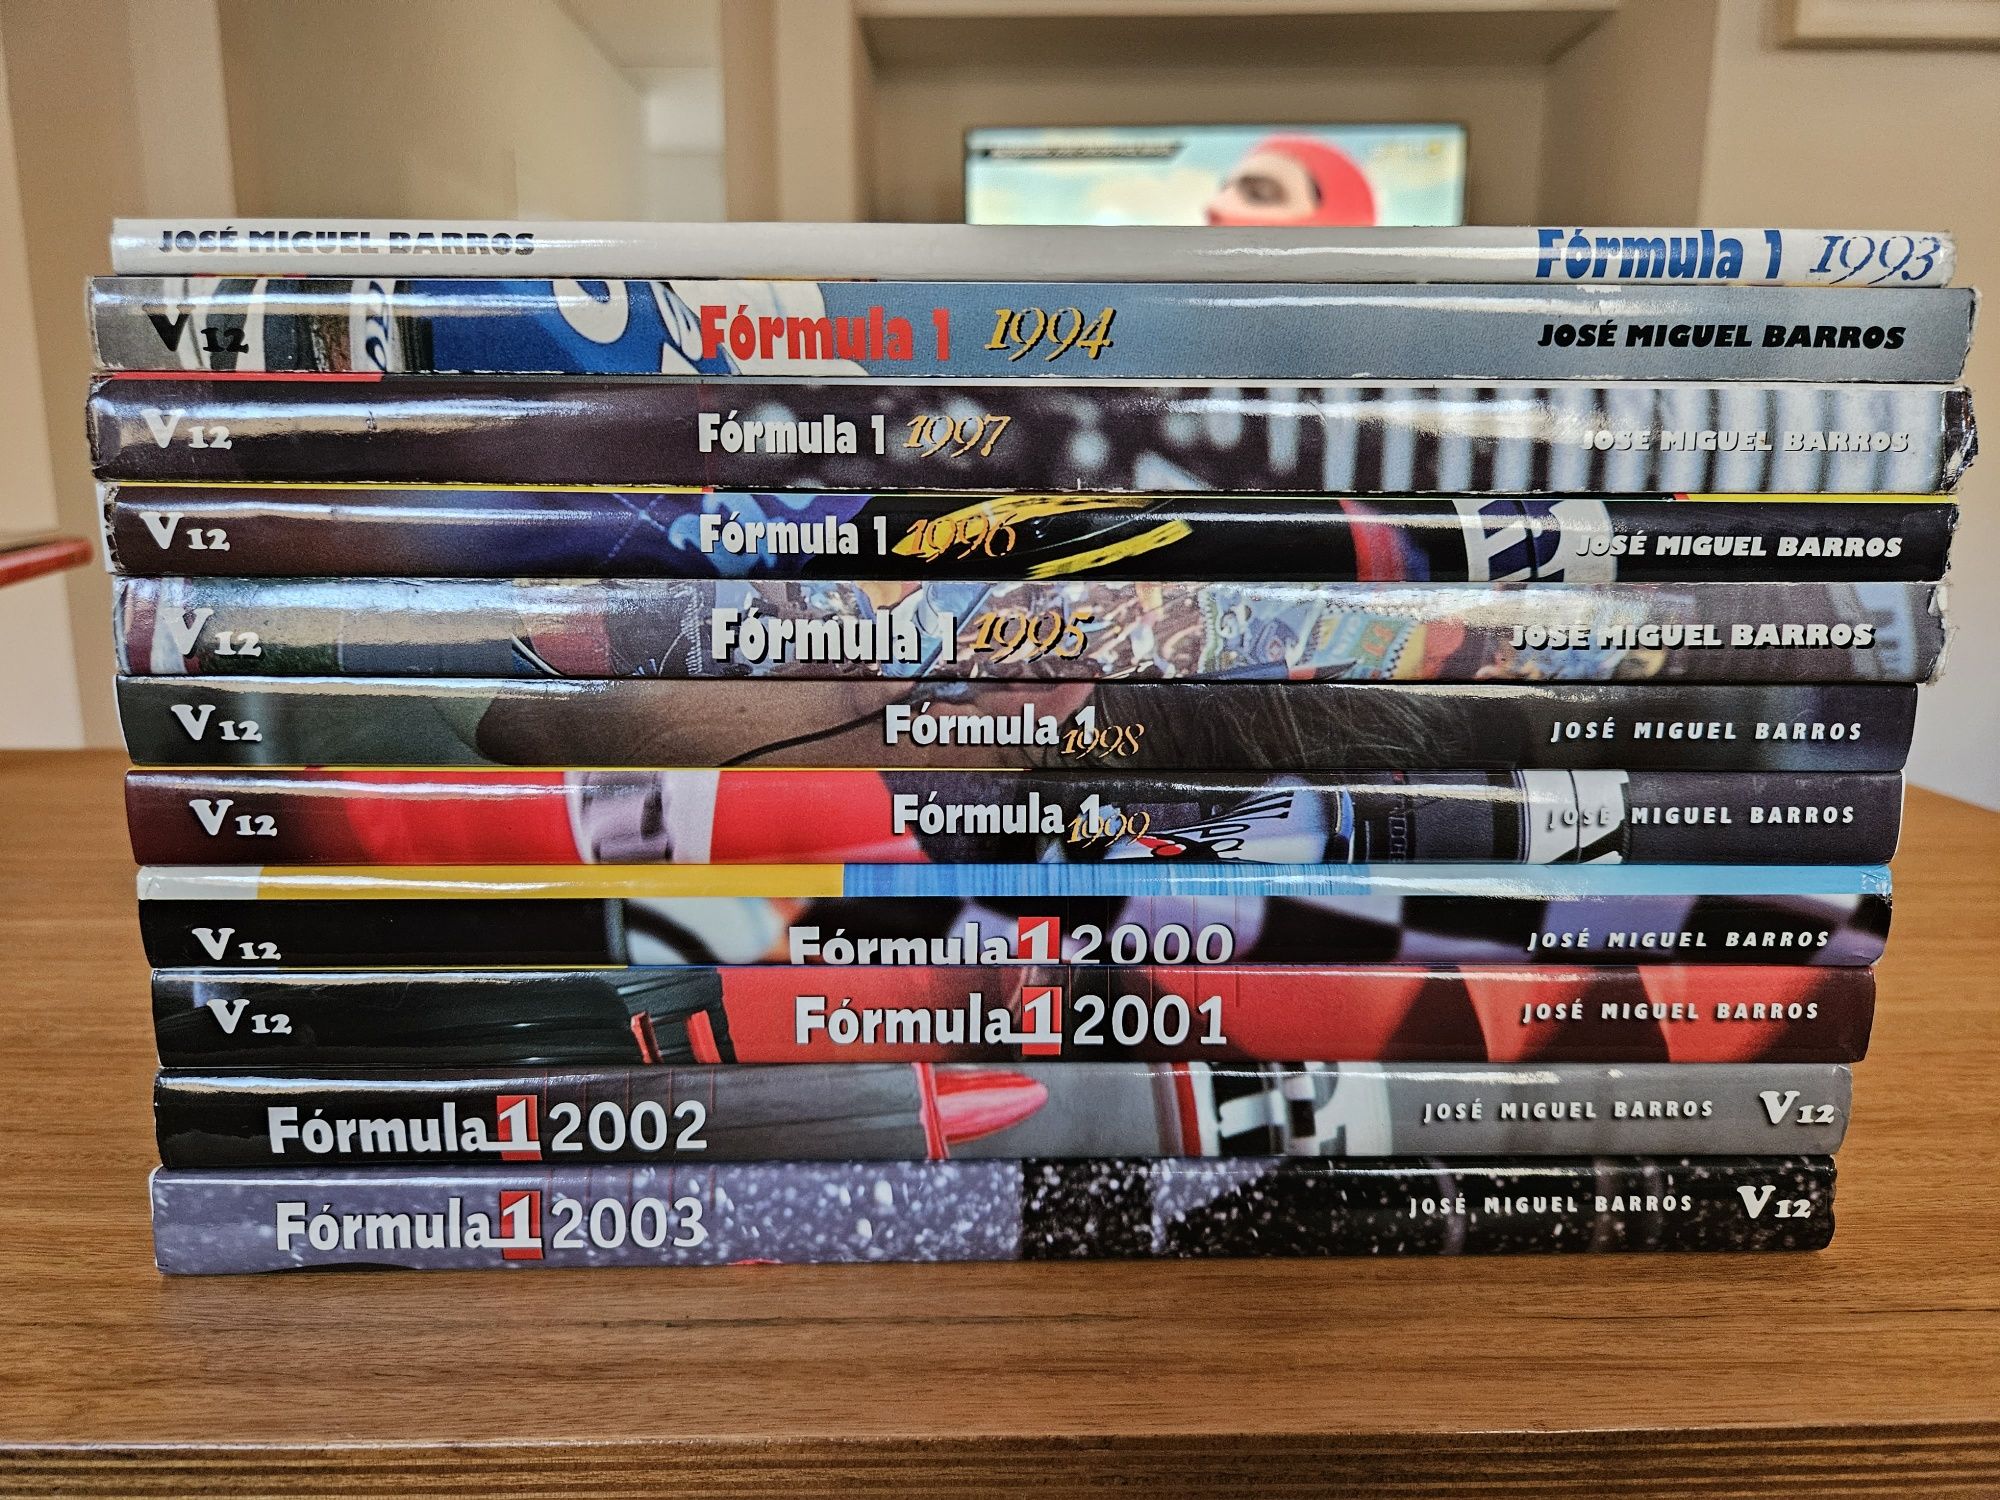 11 Anuários de Formula 1 - José Miguel Barros de 1993 a 2003